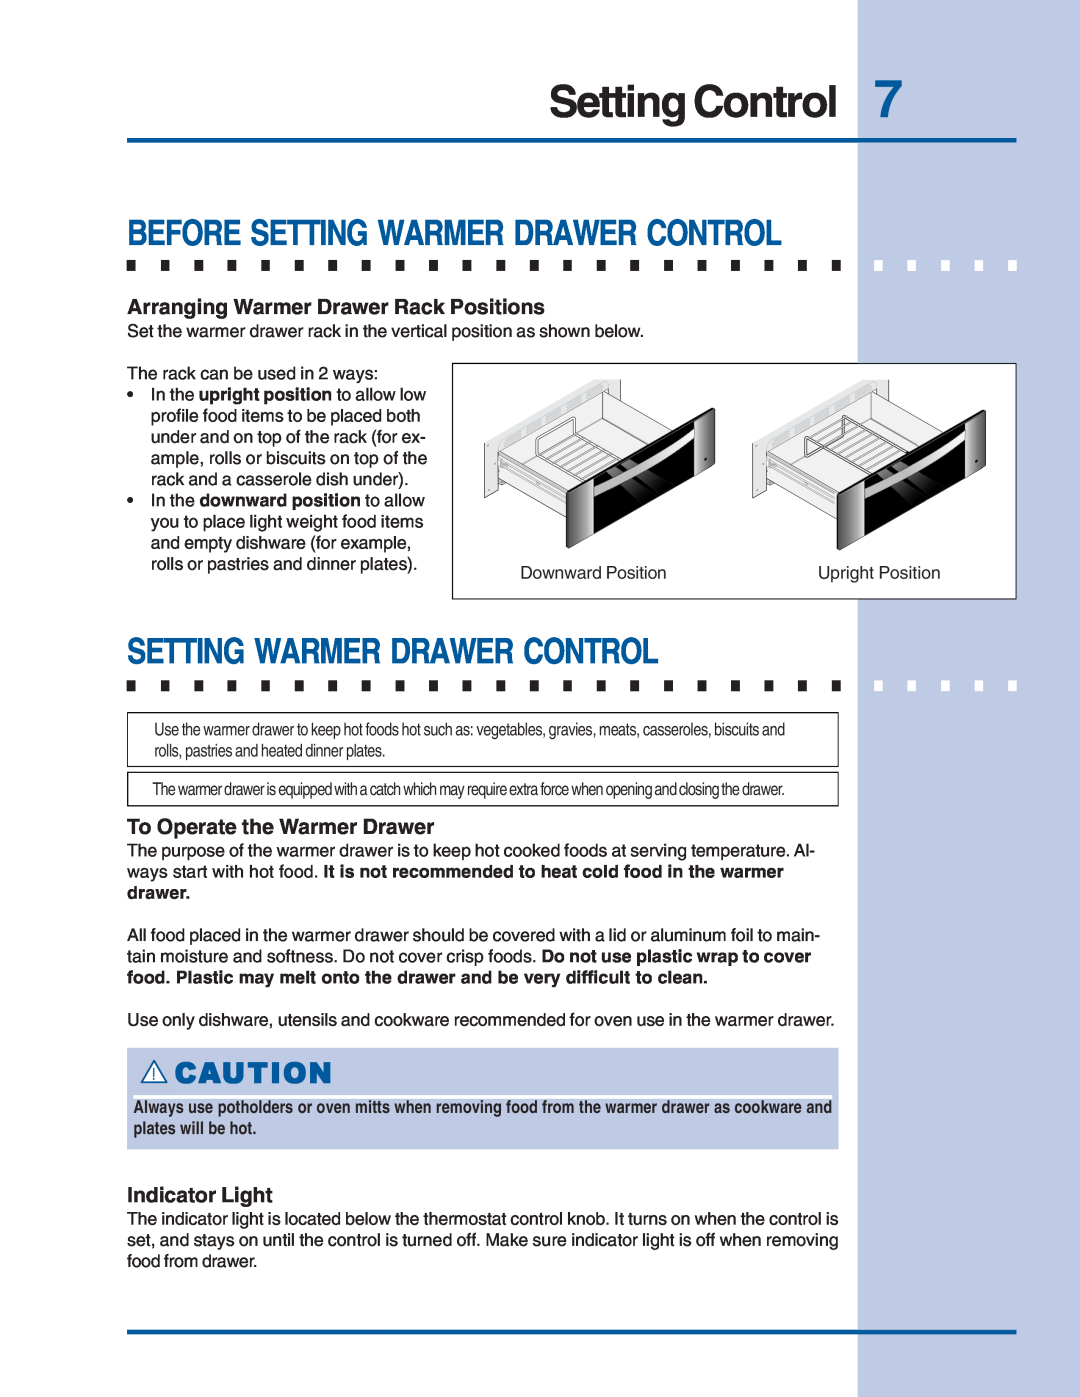 Electrolux Warm & Serve Drawer manual Setting Control, Before Setting Warmer Drawer Control, To Operate the Warmer Drawer 